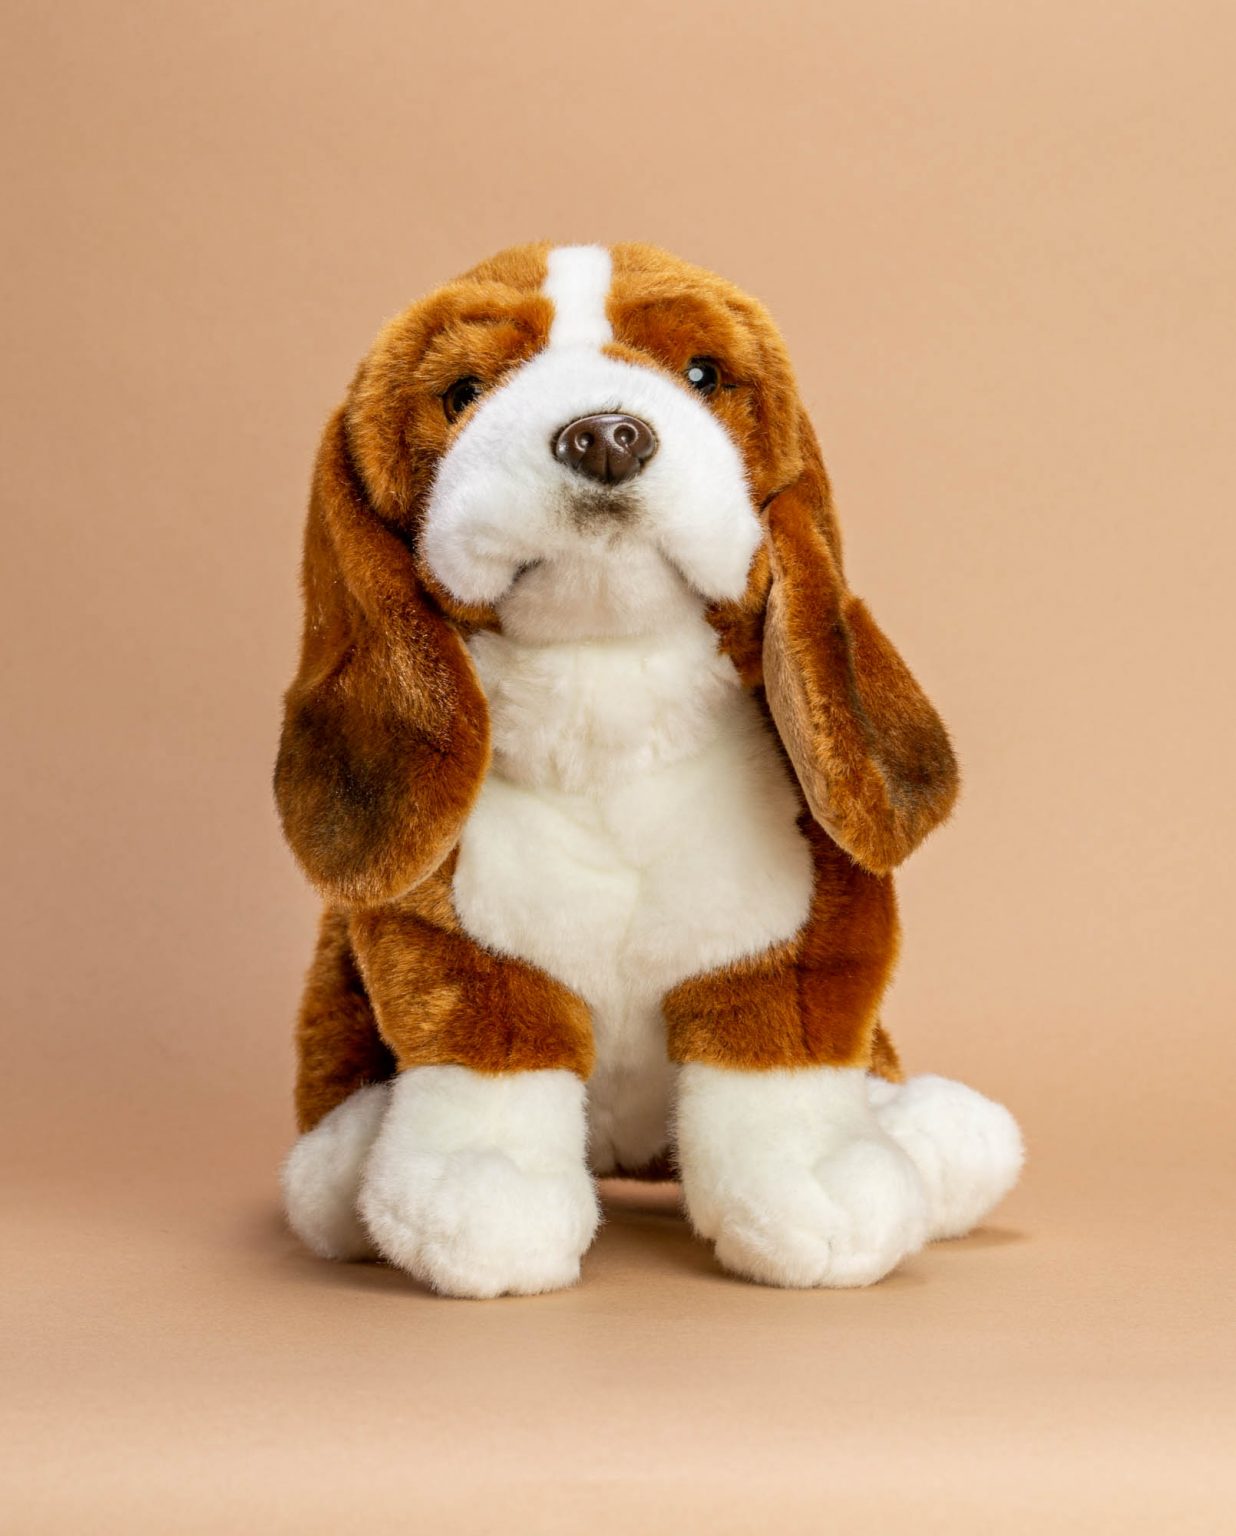 Bassett Hound Dog Soft Toy Gift - Send a Cuddly